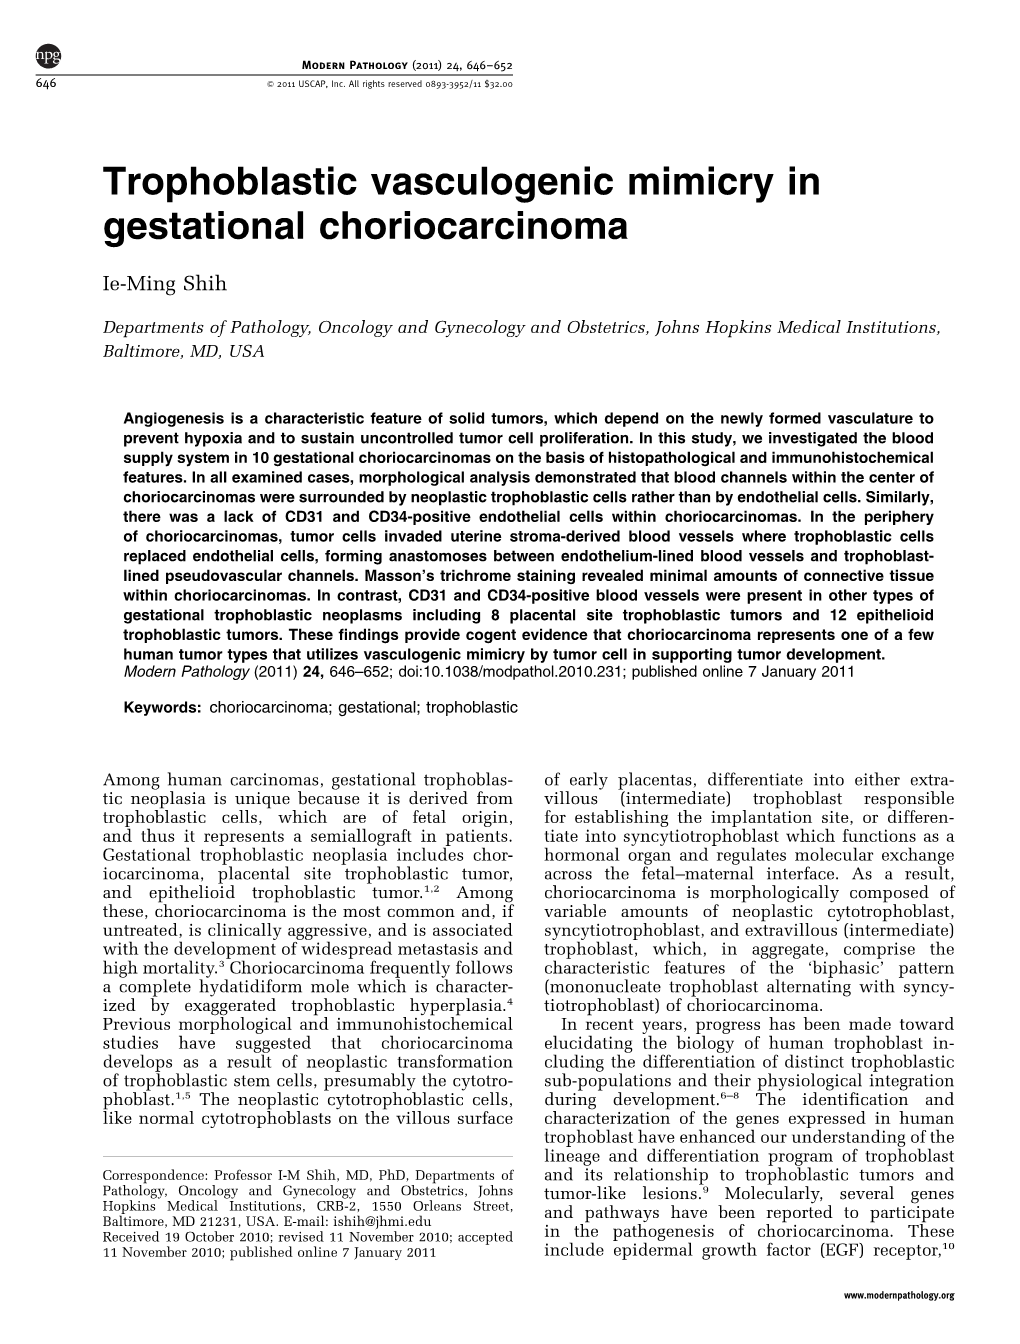 Trophoblastic Vasculogenic Mimicry in Gestational Choriocarcinoma